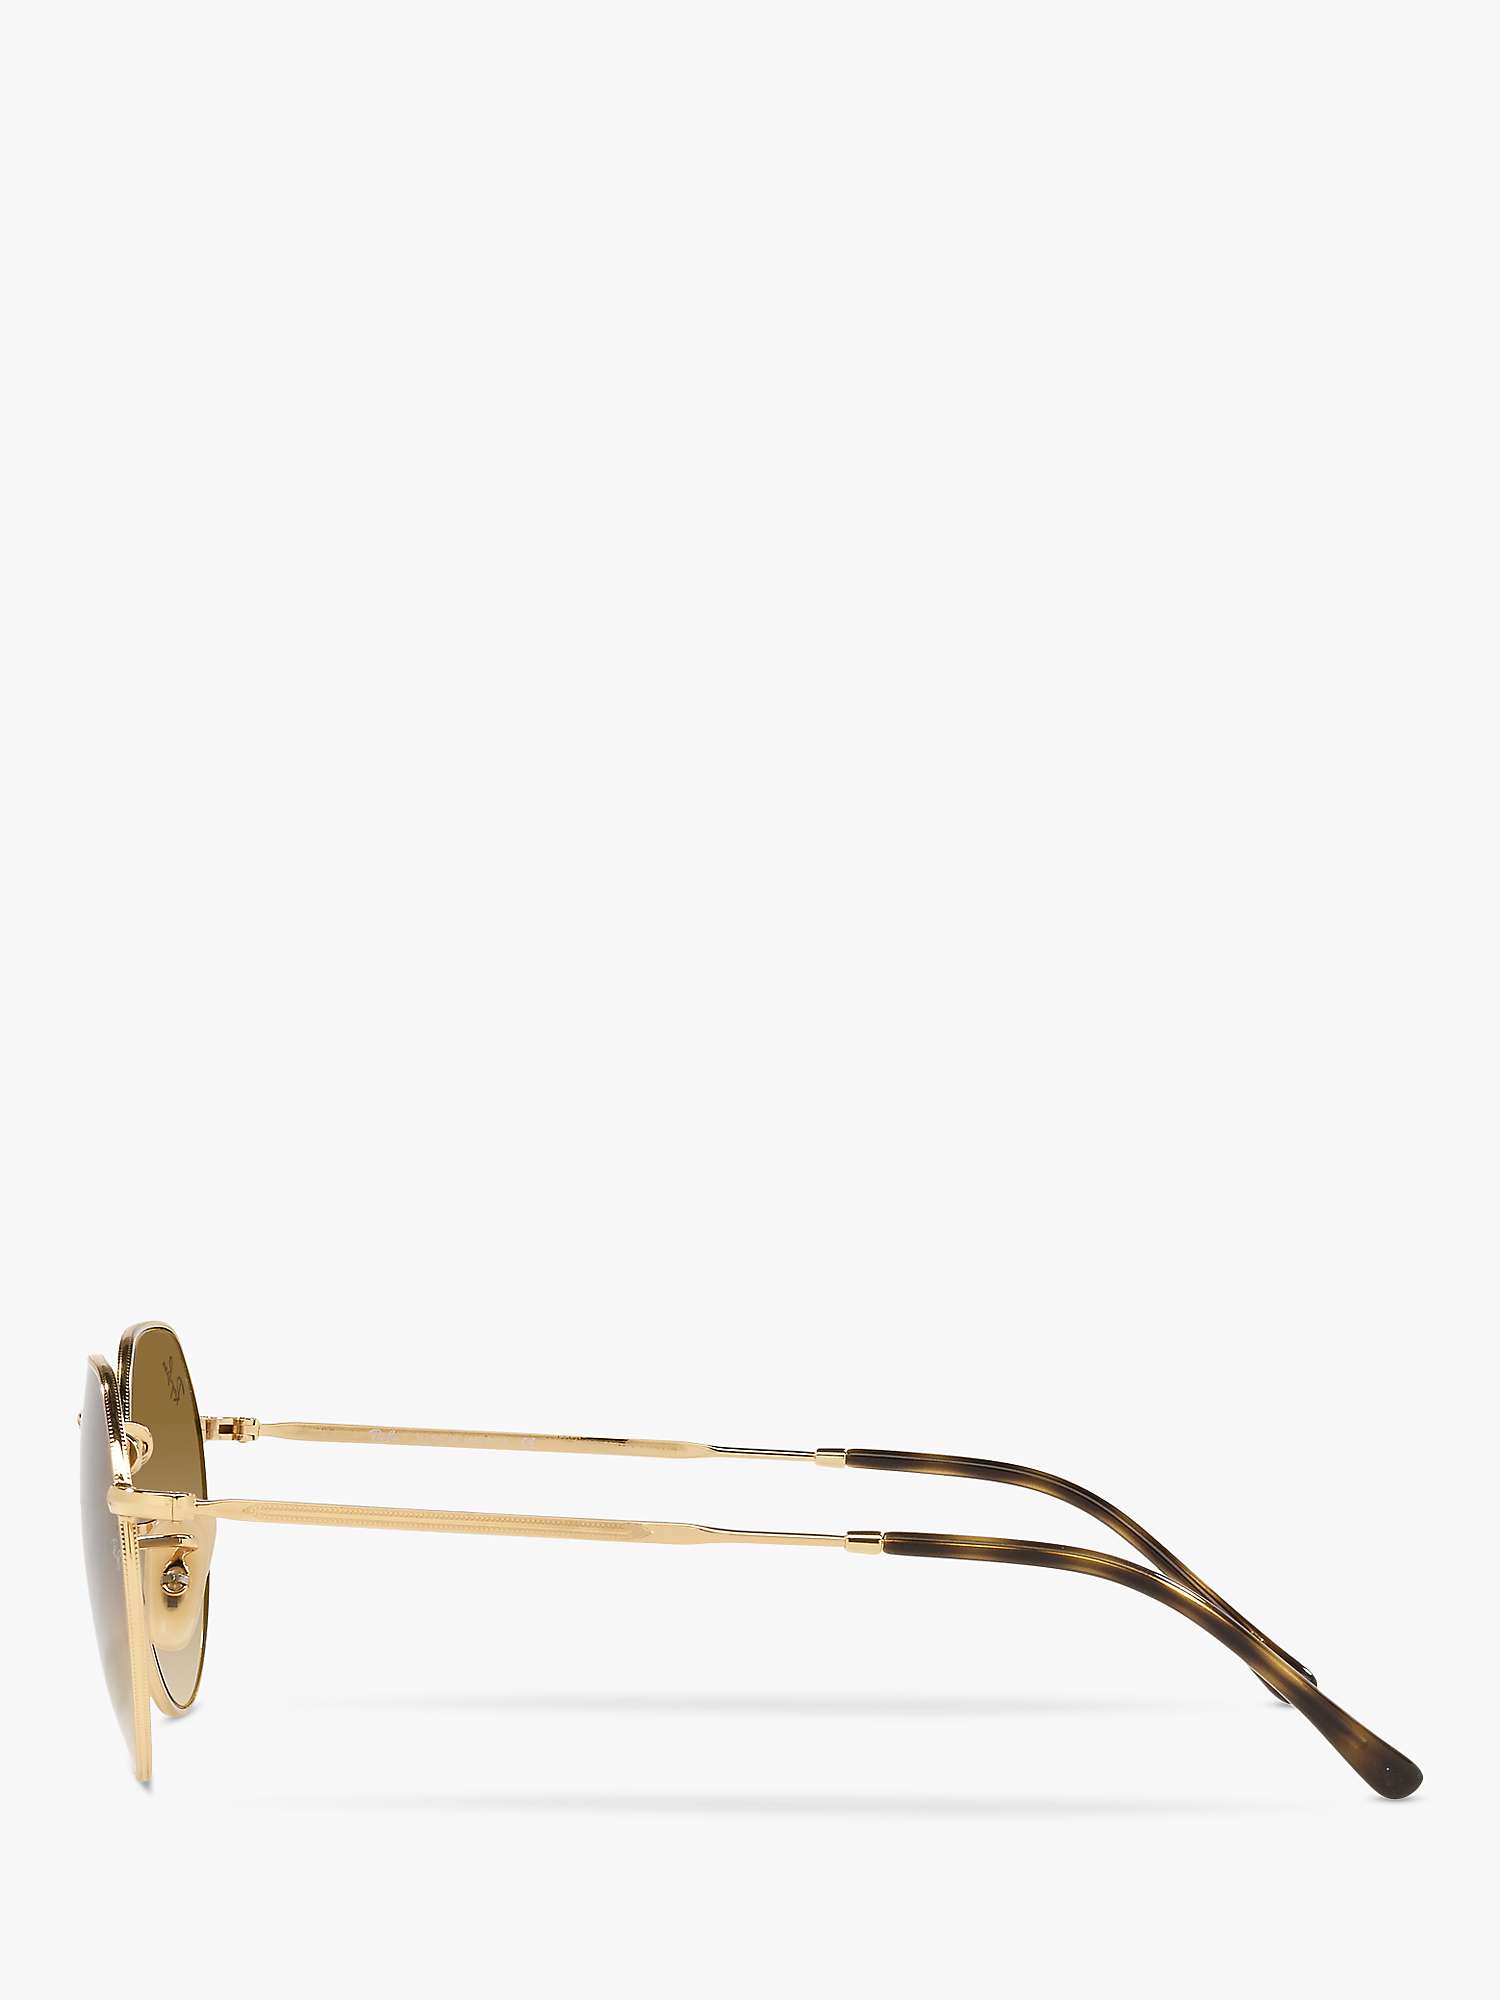 Buy Ray-Ban RB3565 Jack Unisex Metal Hexagonal Sunglasses, Gold/Brown Gradient Online at johnlewis.com